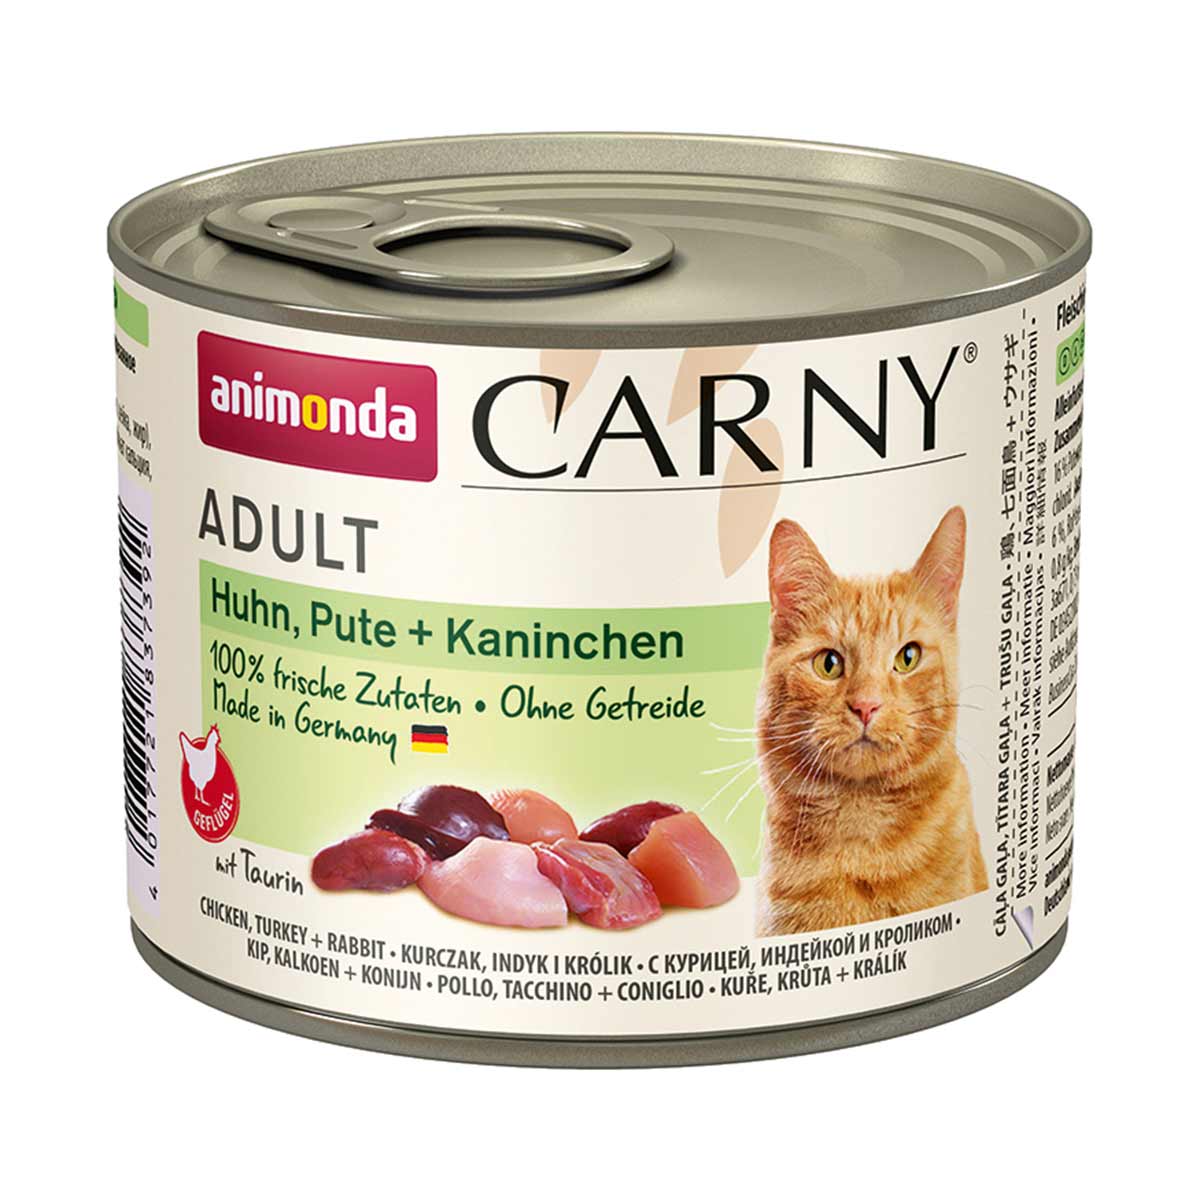 Animonda Carny Adult Huhn, Pute & Kaninchen 24x200g von Animonda